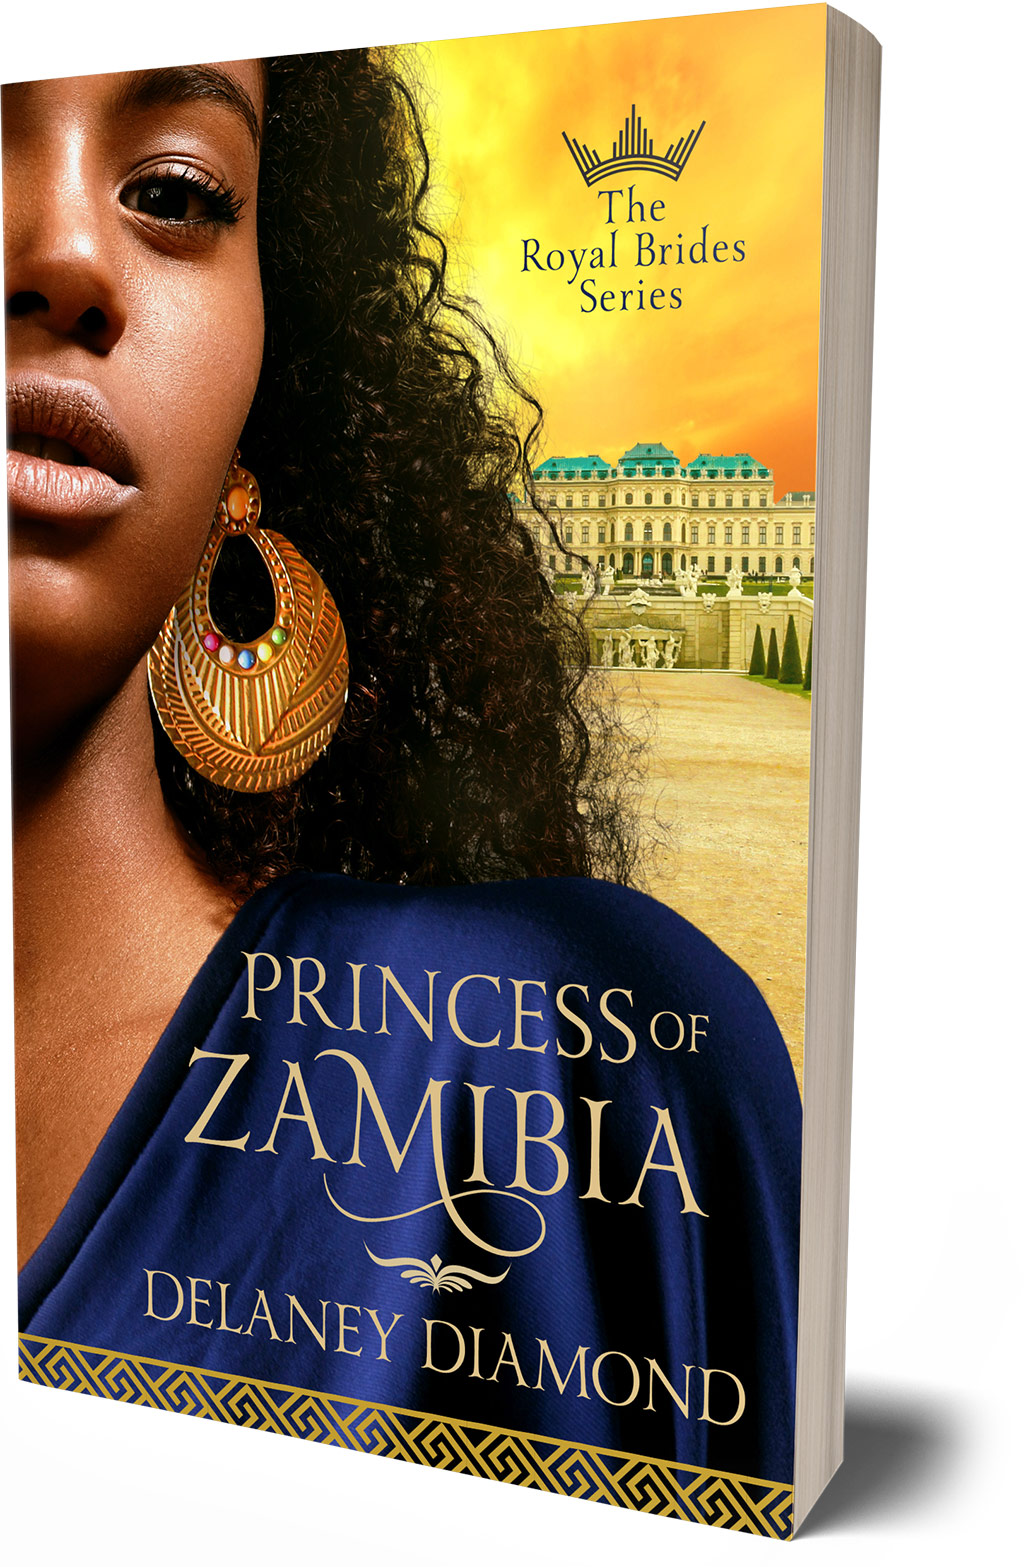 Princess of Zamibia, Royal Brides Book 1, by Delaney Diamond